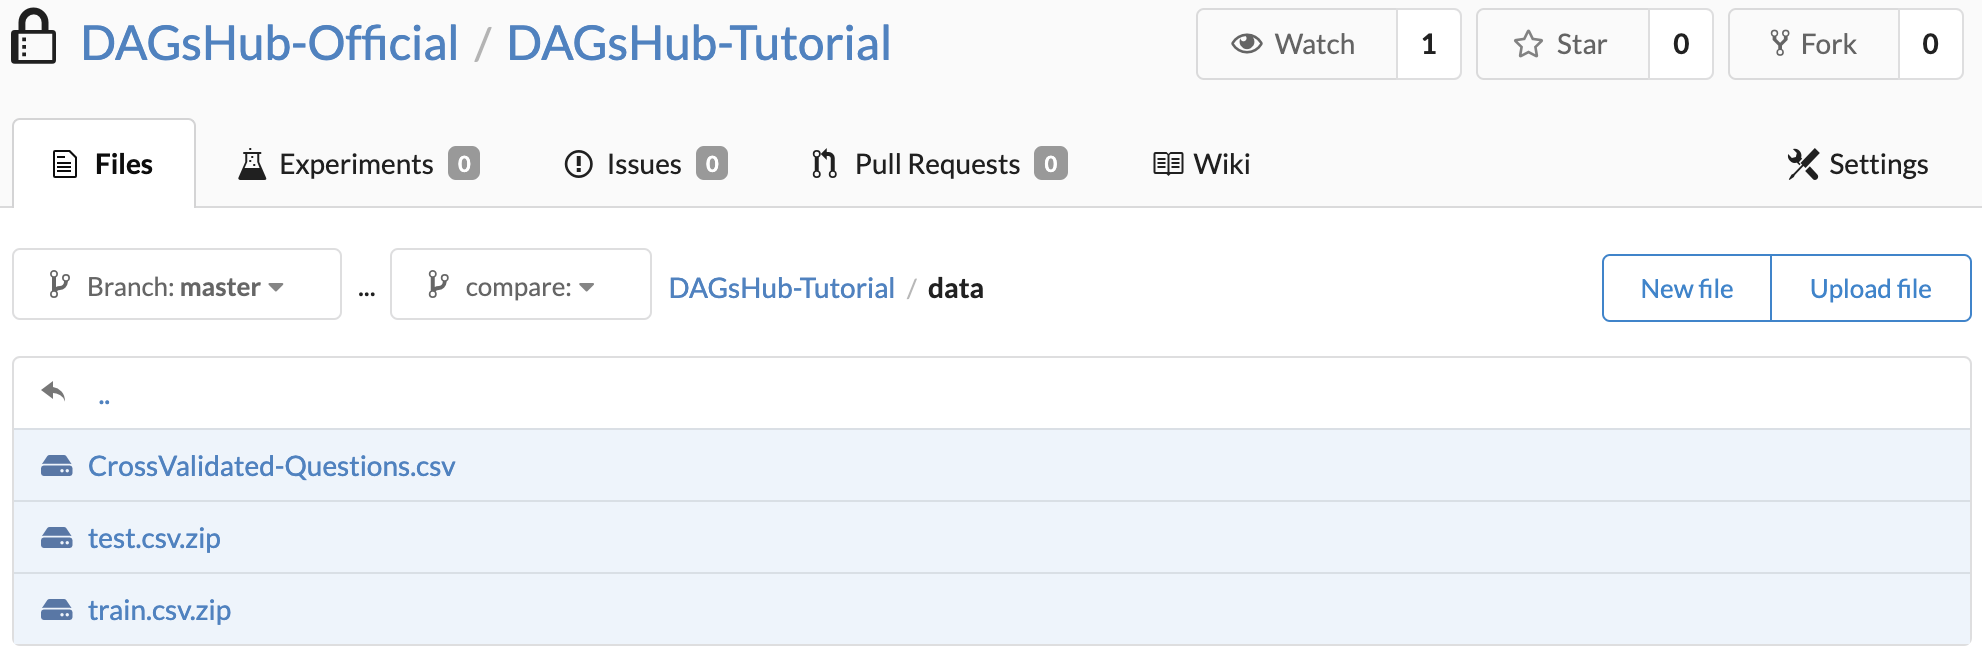 Browsing DVC versioned data on DagsHub